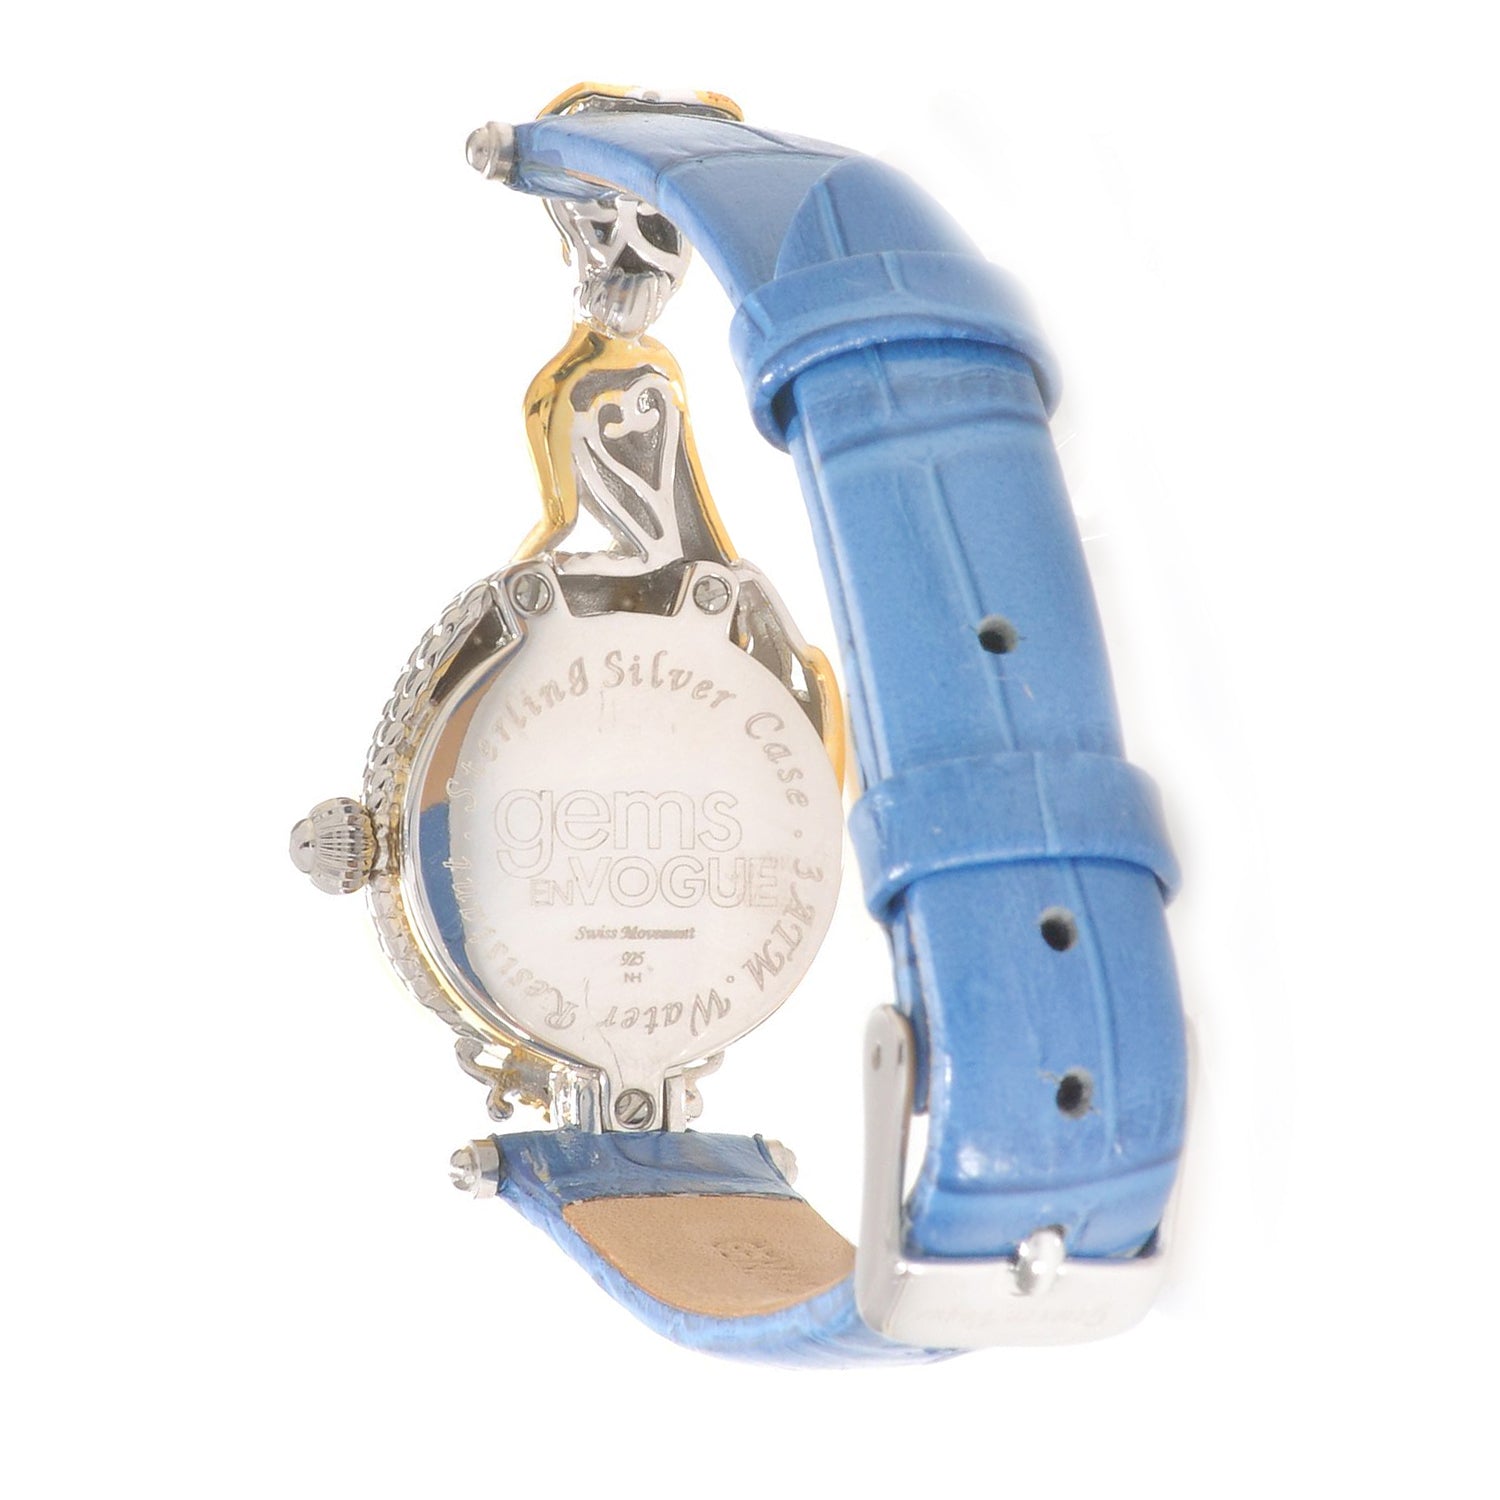 Gems en Vogue Blue Sapphire & Swiss Blue Topaz Mermaid Leather Strap Watch